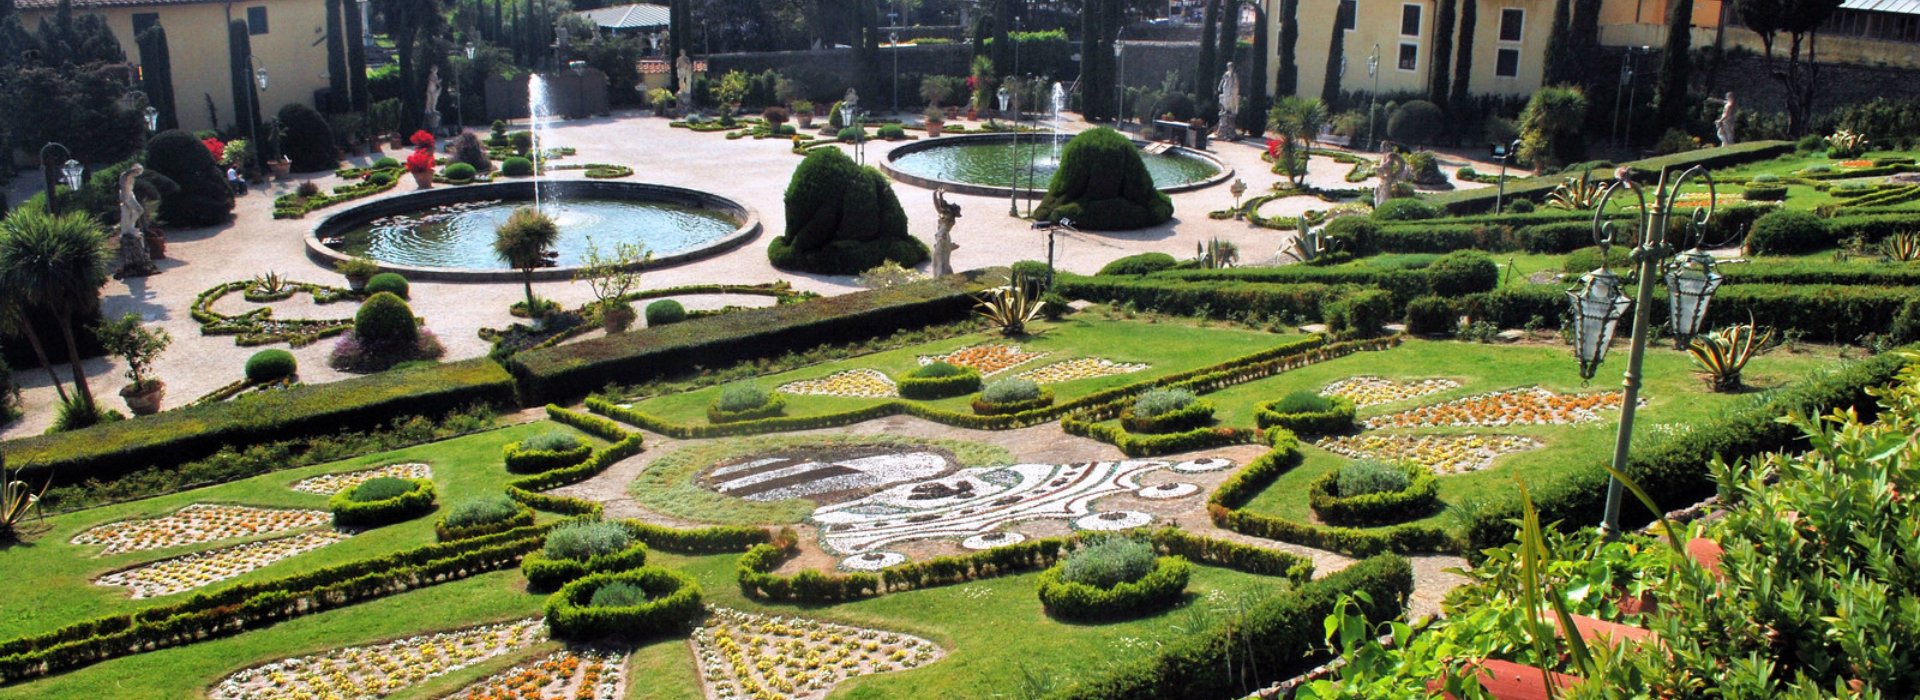 Villa Garzoni and its garden | Visit Tuscany